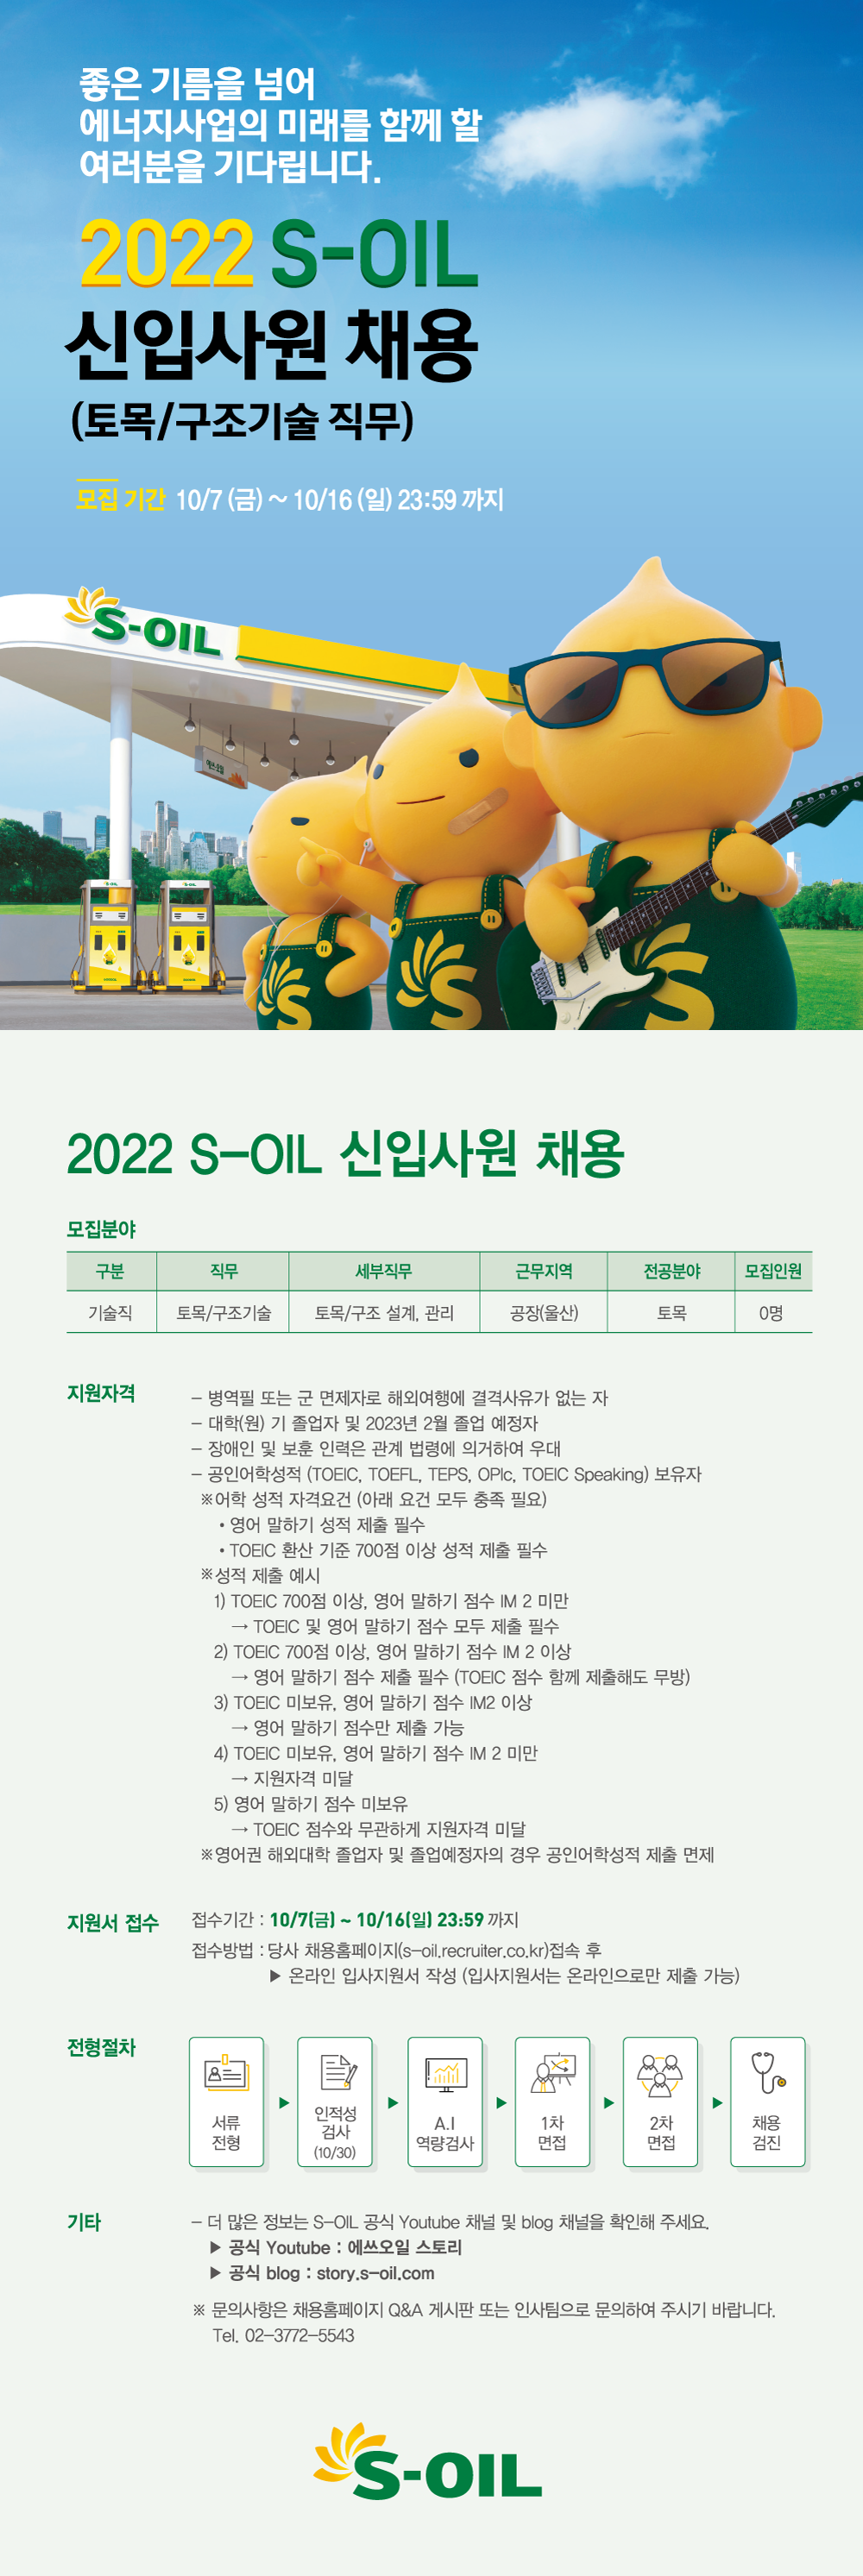 2022 S-OIL 신입사원 채용